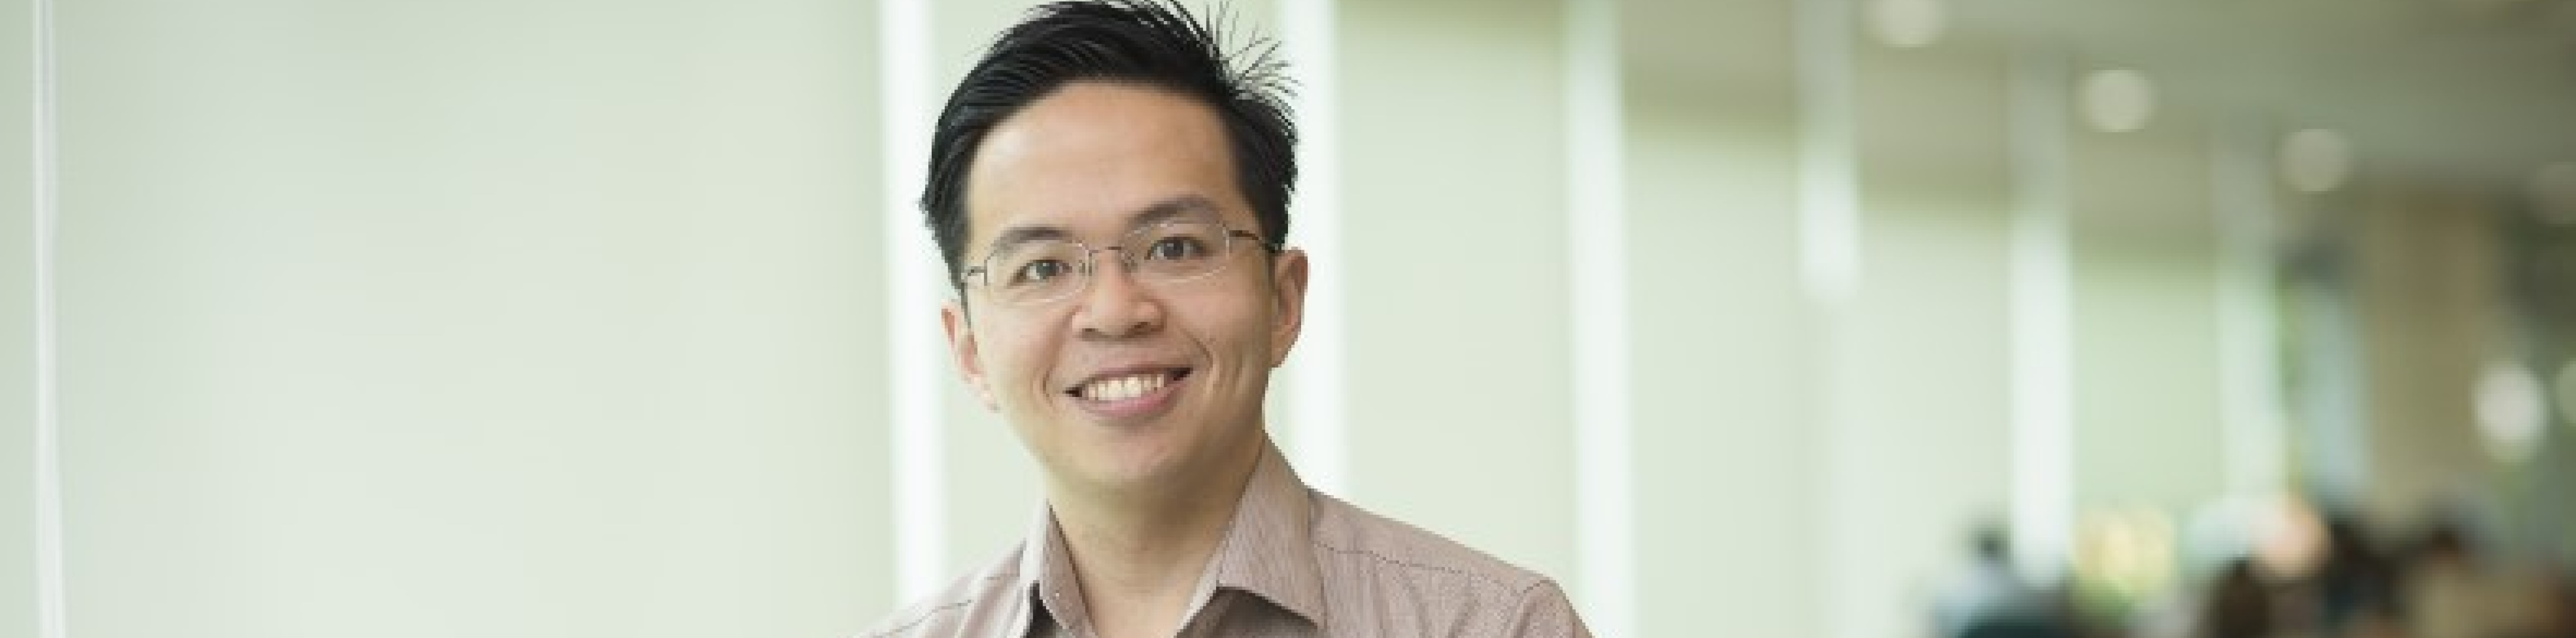 SMU Professor of Computer Science David Lo